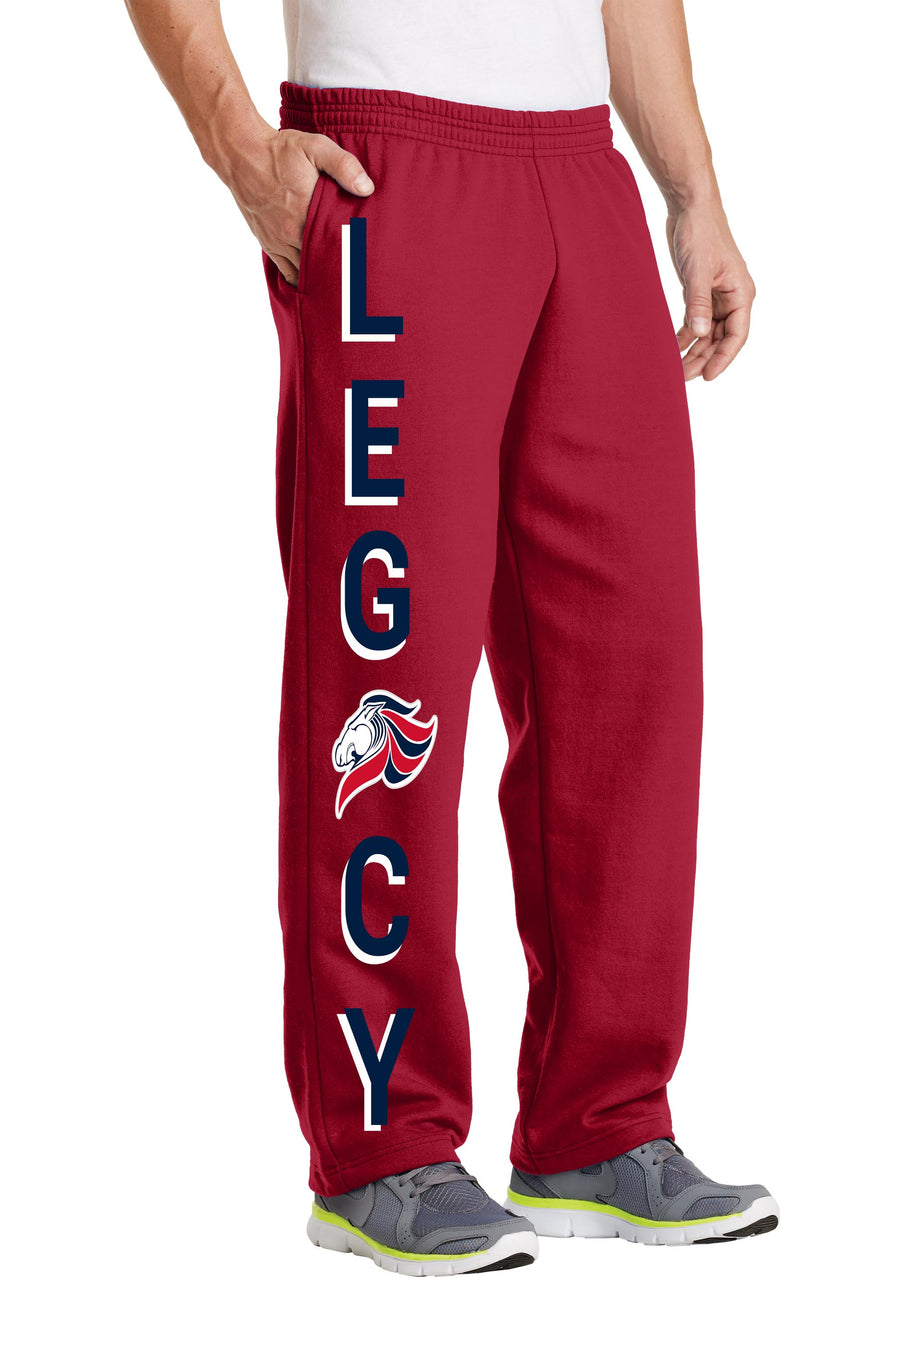 *New* - Legacy Traditional School - NW Tucson Sweatpants